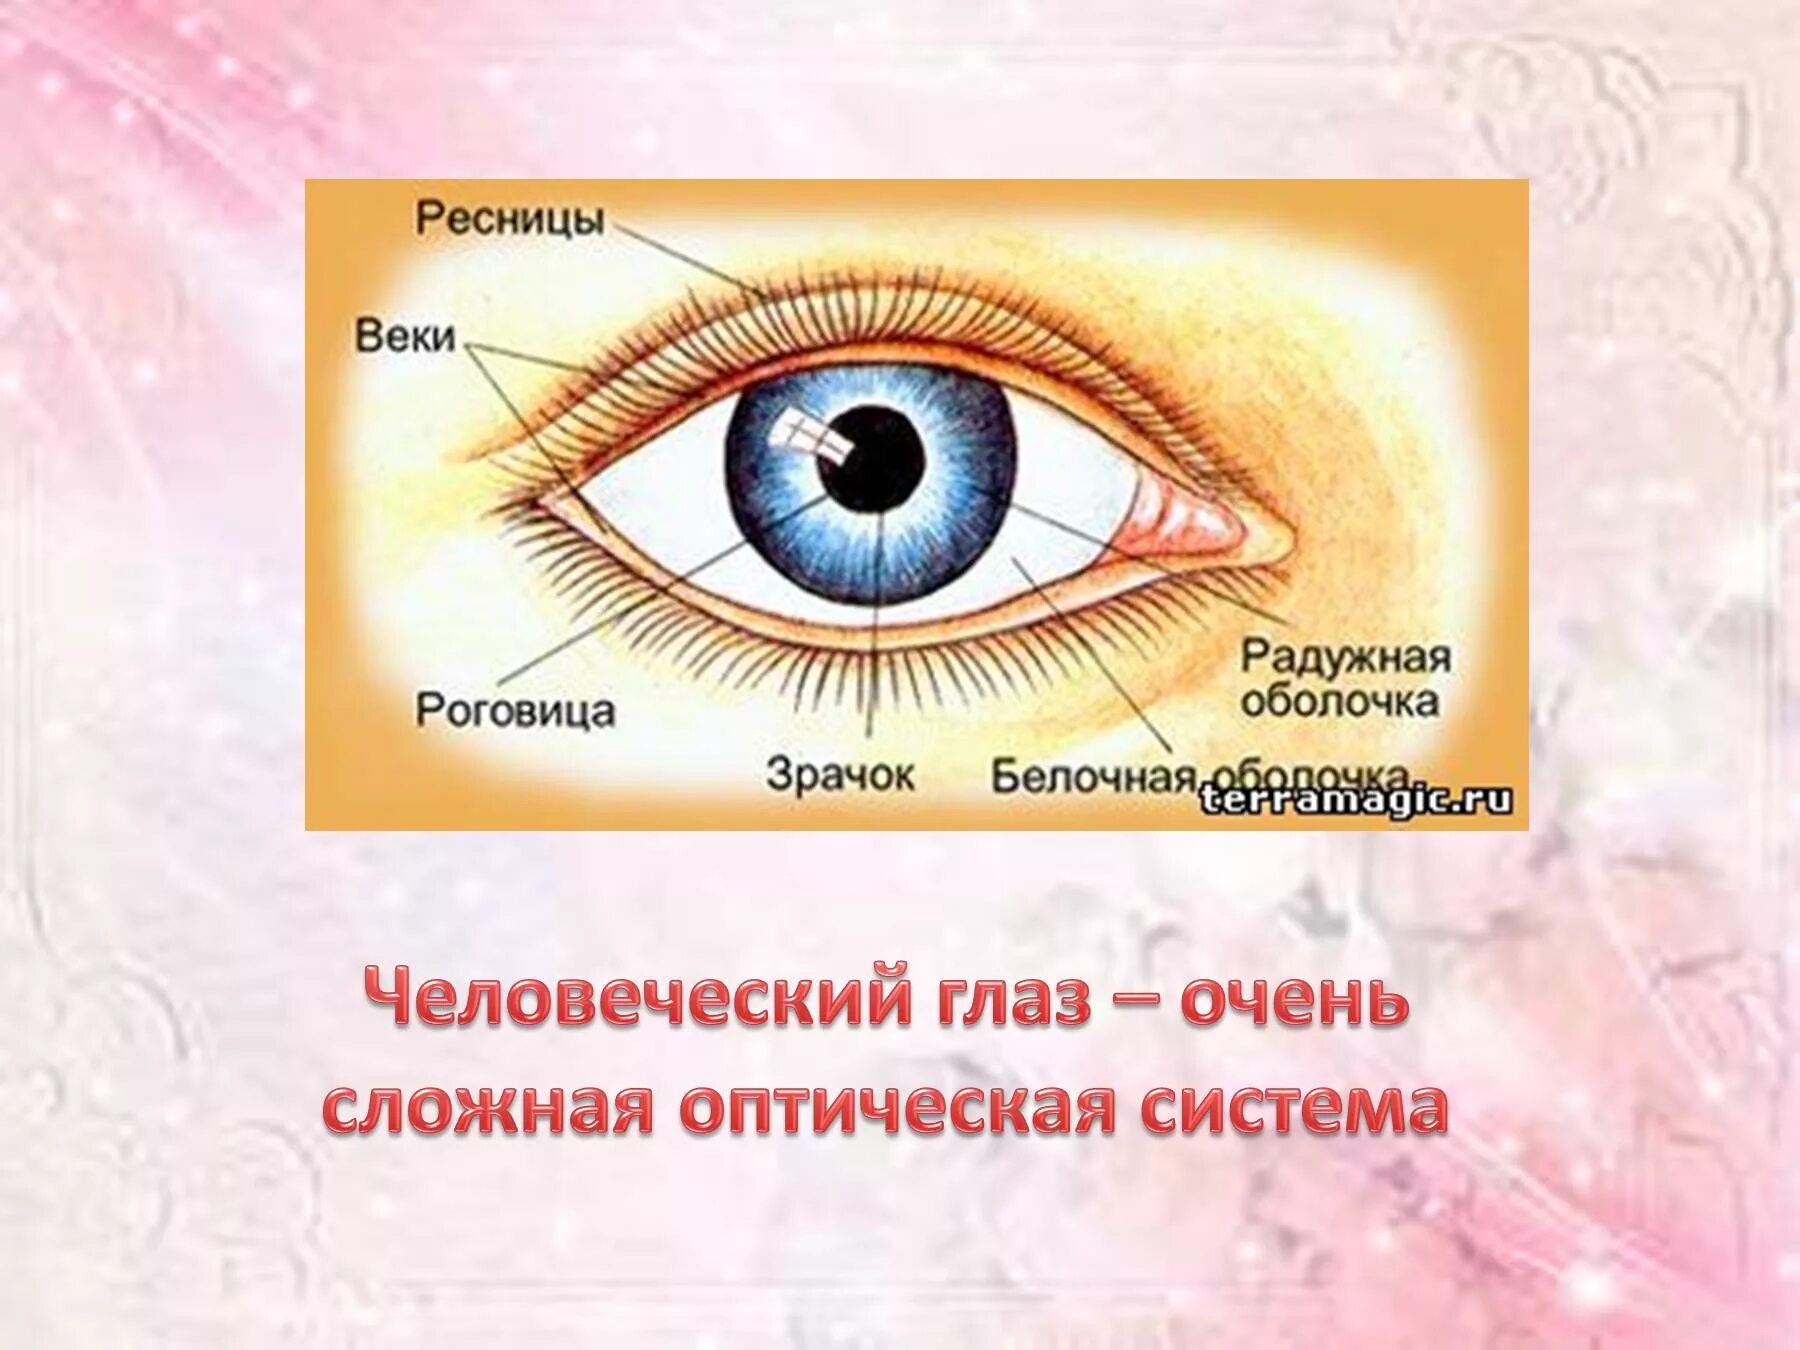 Глаз доклад по физике. Орган зрения презентация. Презентация на тему глаза человека. Доклад на тему глаз. Презентация на тему зрение.